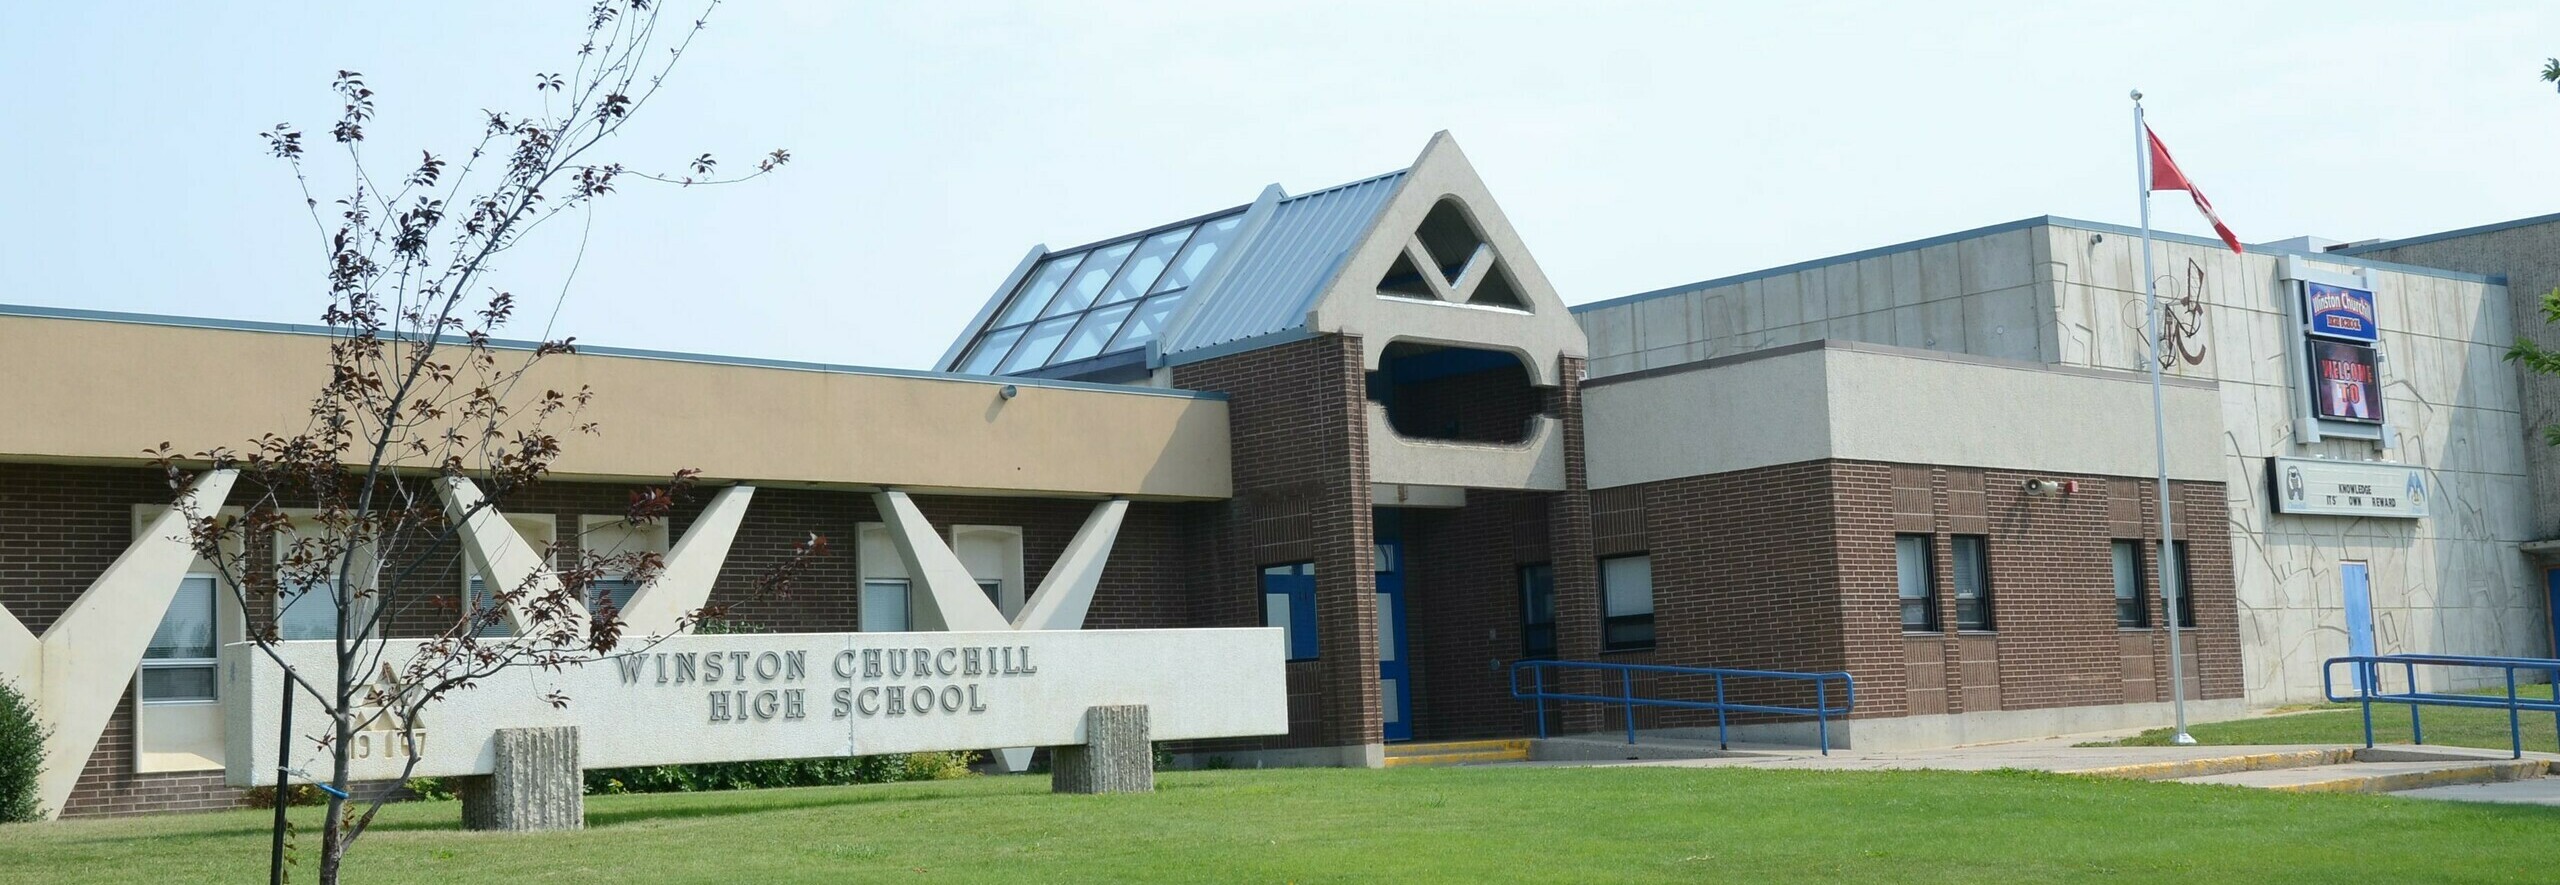 Winston Churchill High School Banner Photo